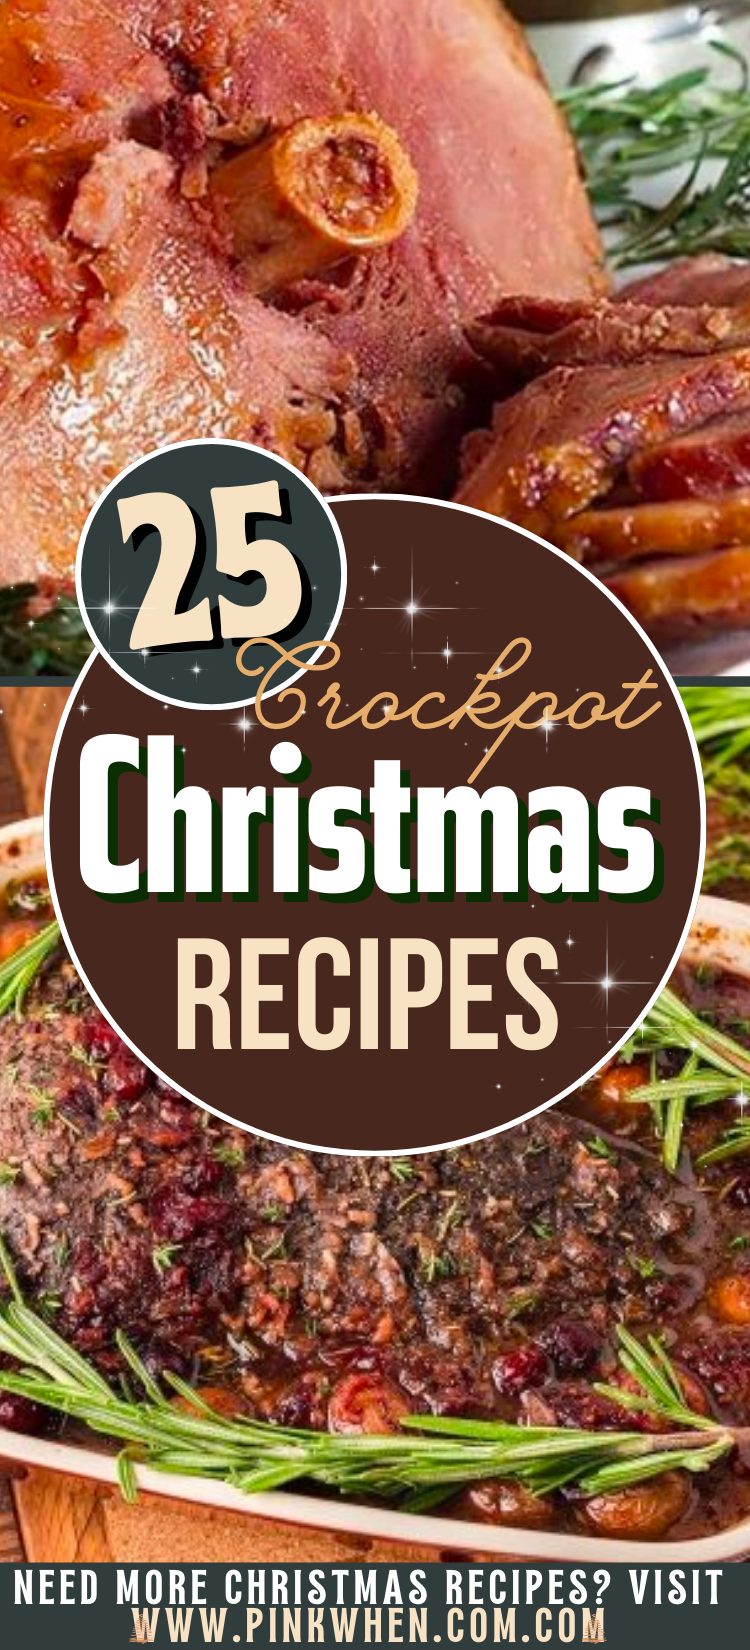 Crockpot Christmas Recipes to Make the Holidays Easier